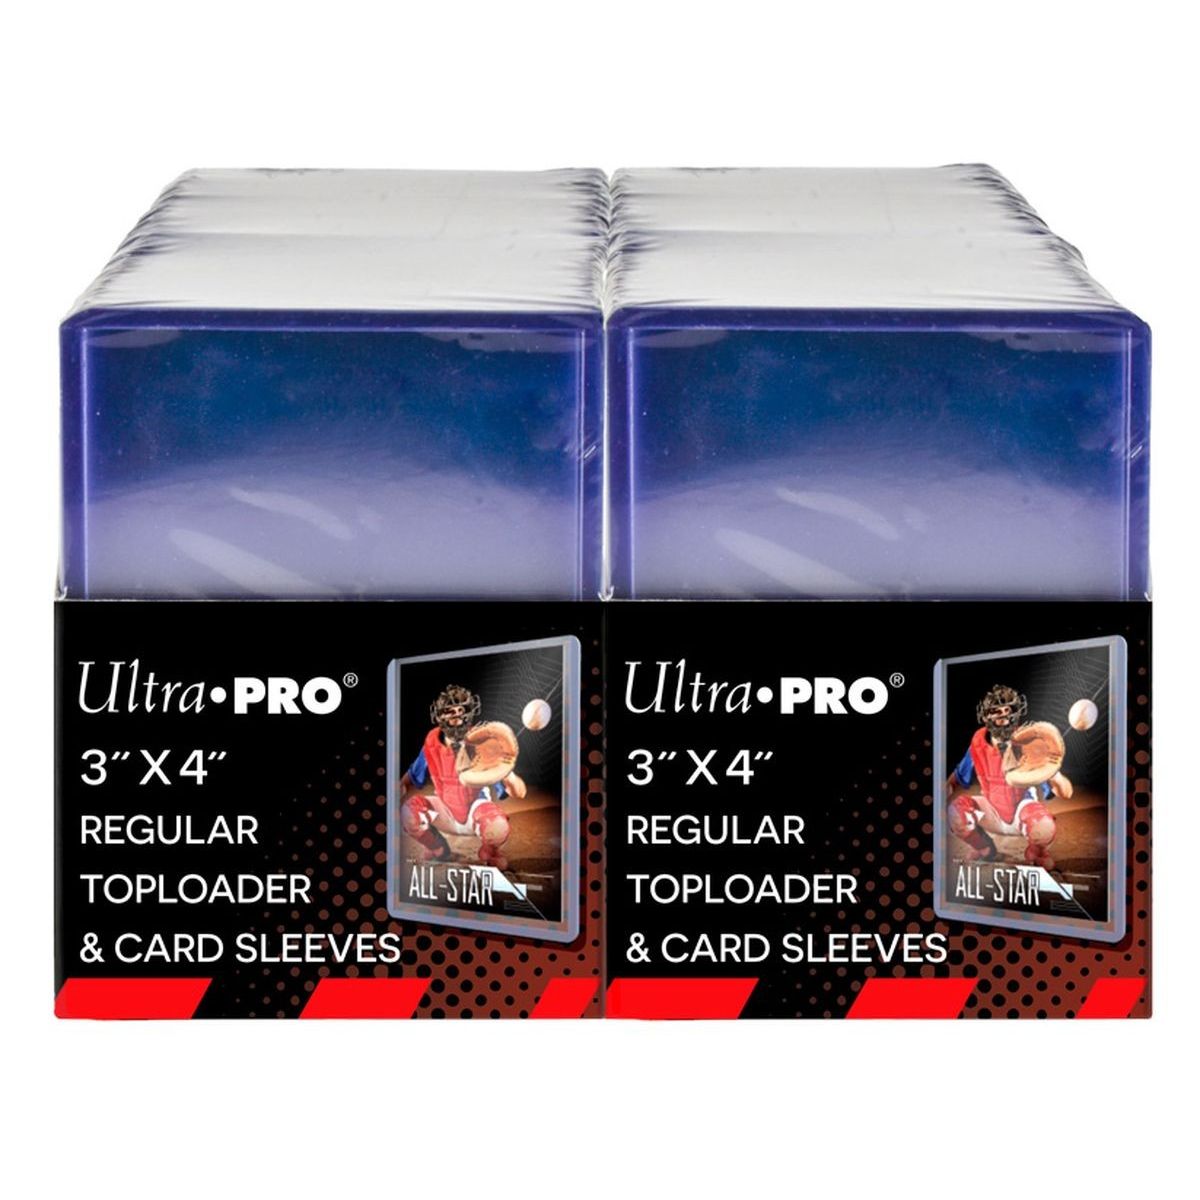 Ultra Pro - Rigid Card Sleeves - Top Loader 3"X4" (200) + 100 Sleeves